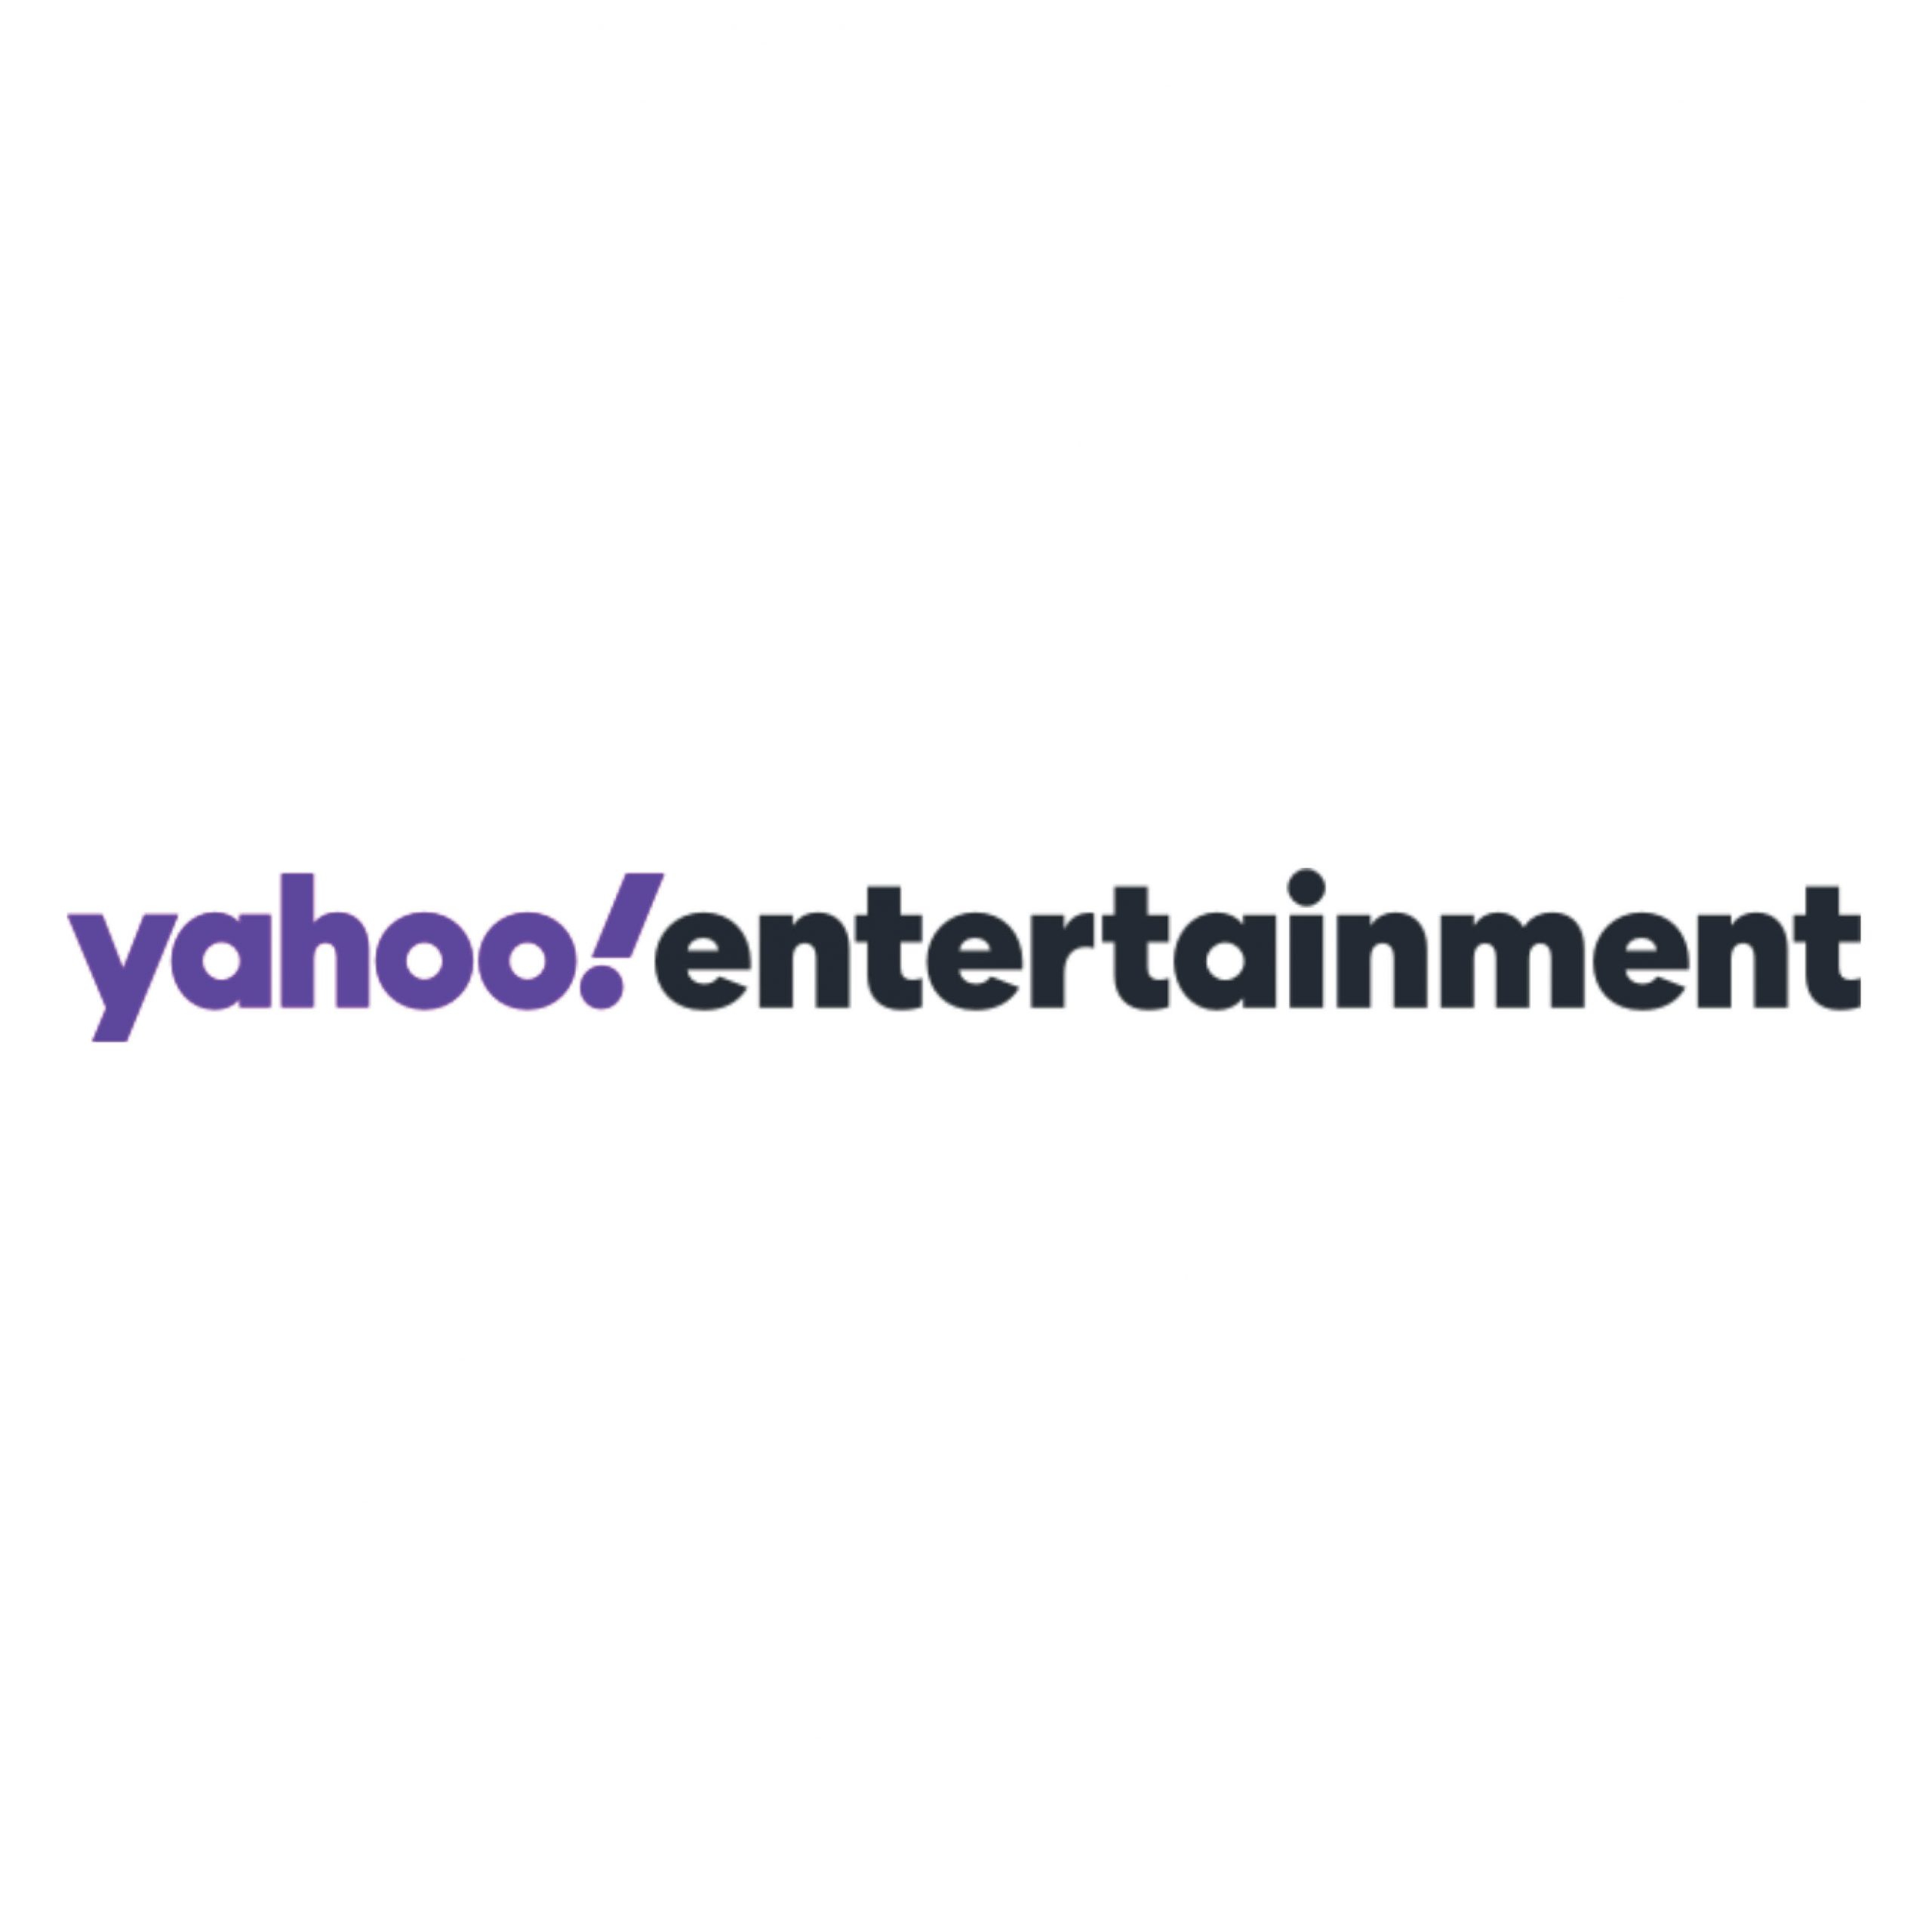 Yahoo Entertainment Logo 2